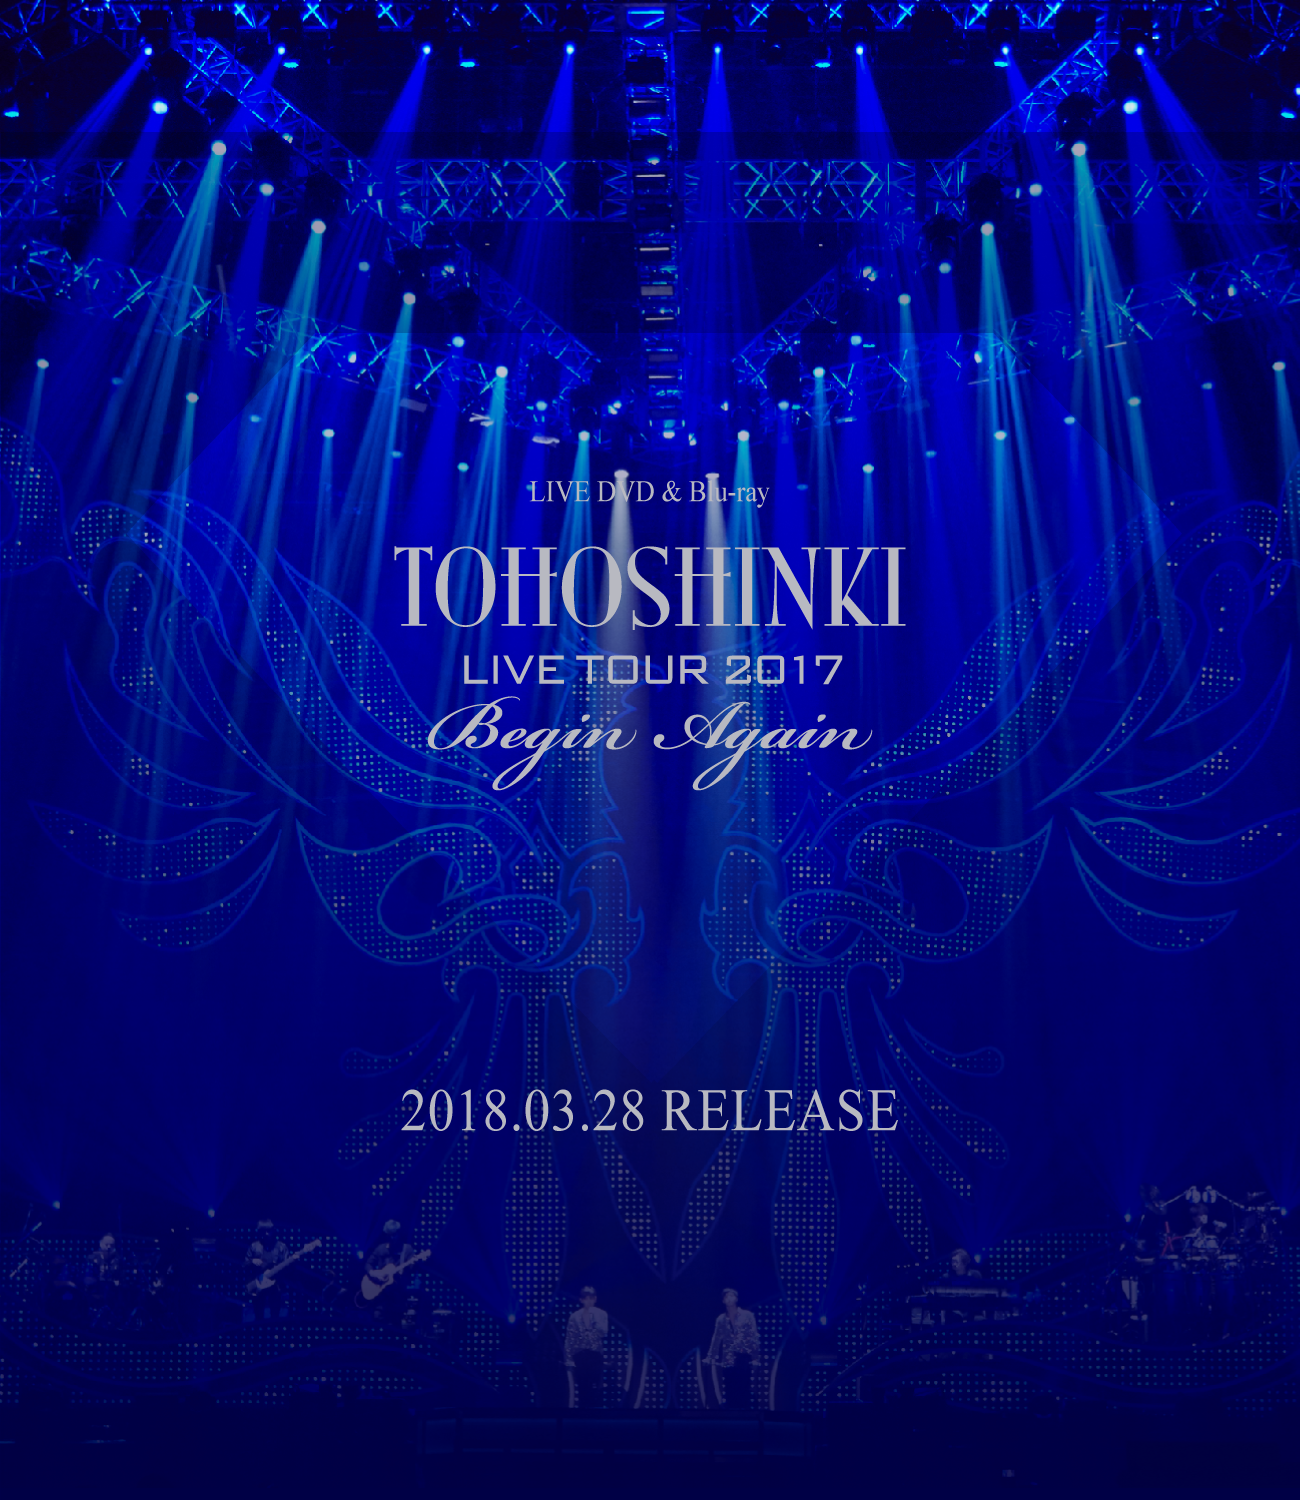 LIVE DVD & Blu-ray「 東方神起 LIVE TOUR 2017 ～Begin Again 